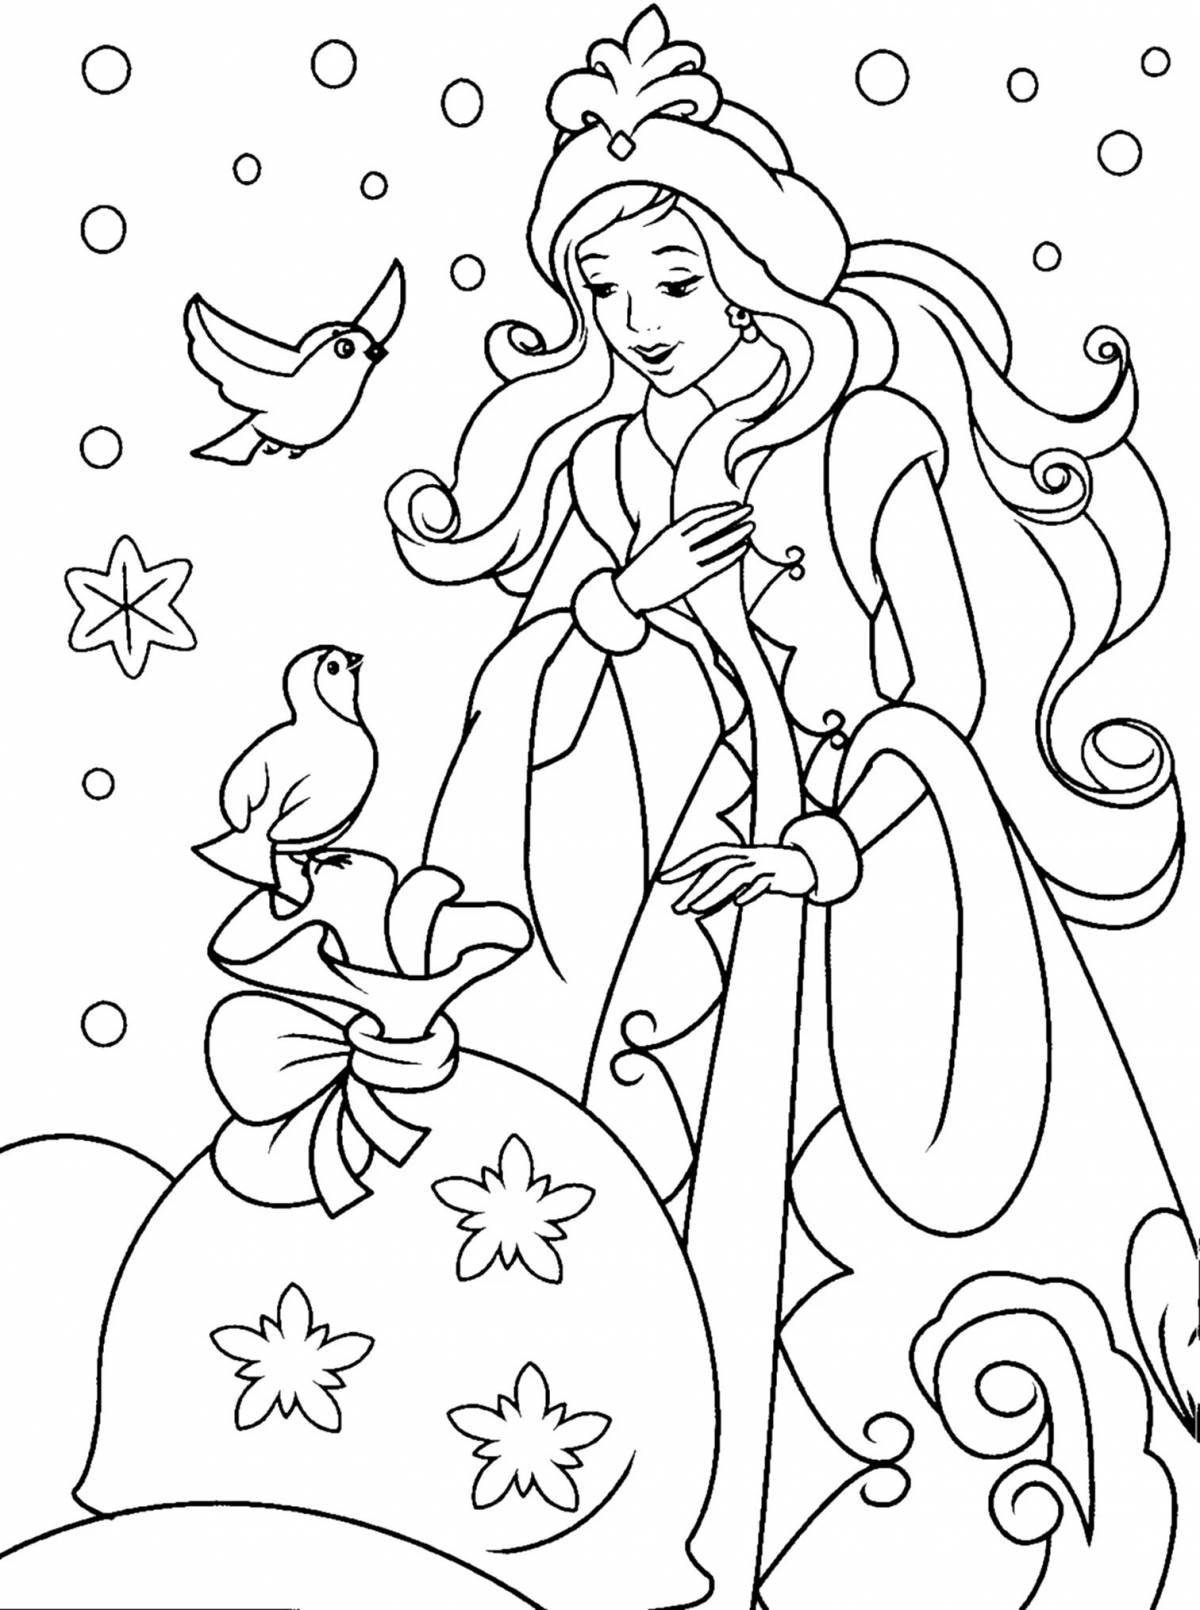 Joyful coloring for girls snow maiden